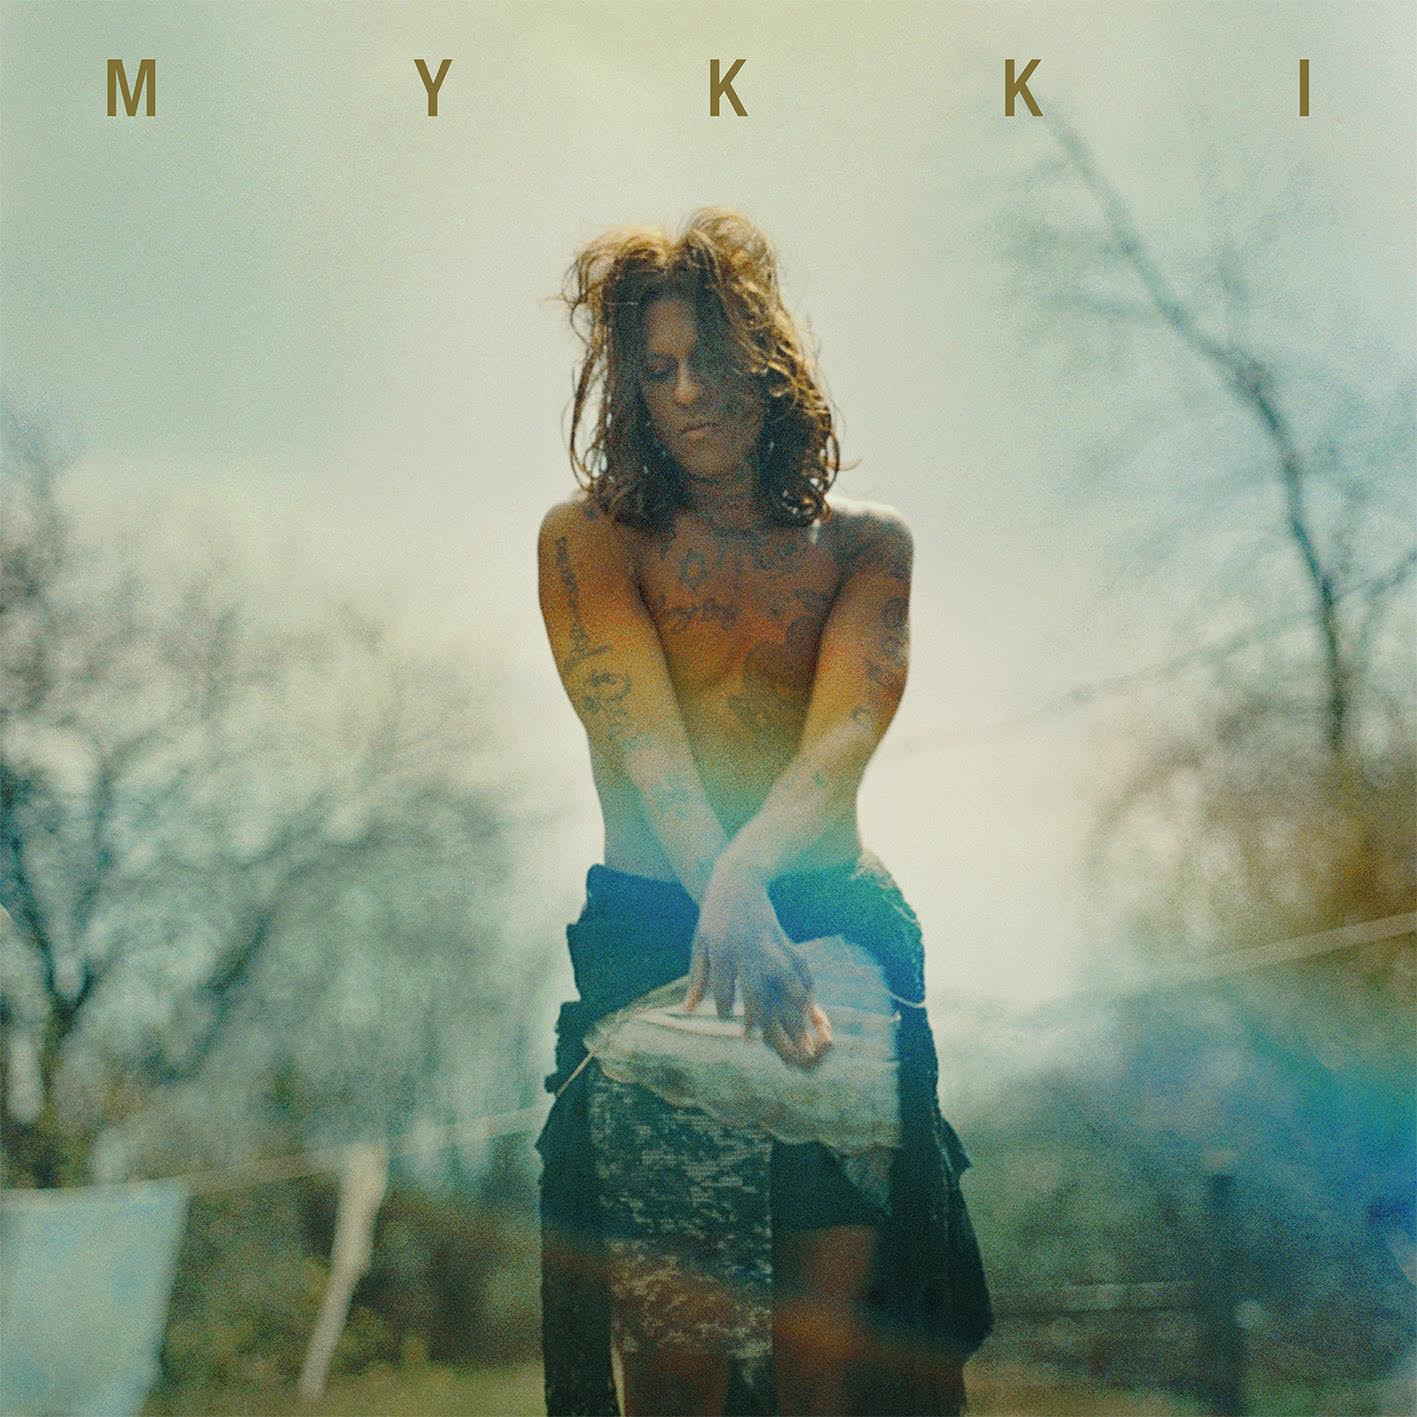 mykki-blanco-sapprete-a-sortir-son-premier-album-mykki-produit-par-woodkid-jermiah-meece-16-septembre-effronte-01